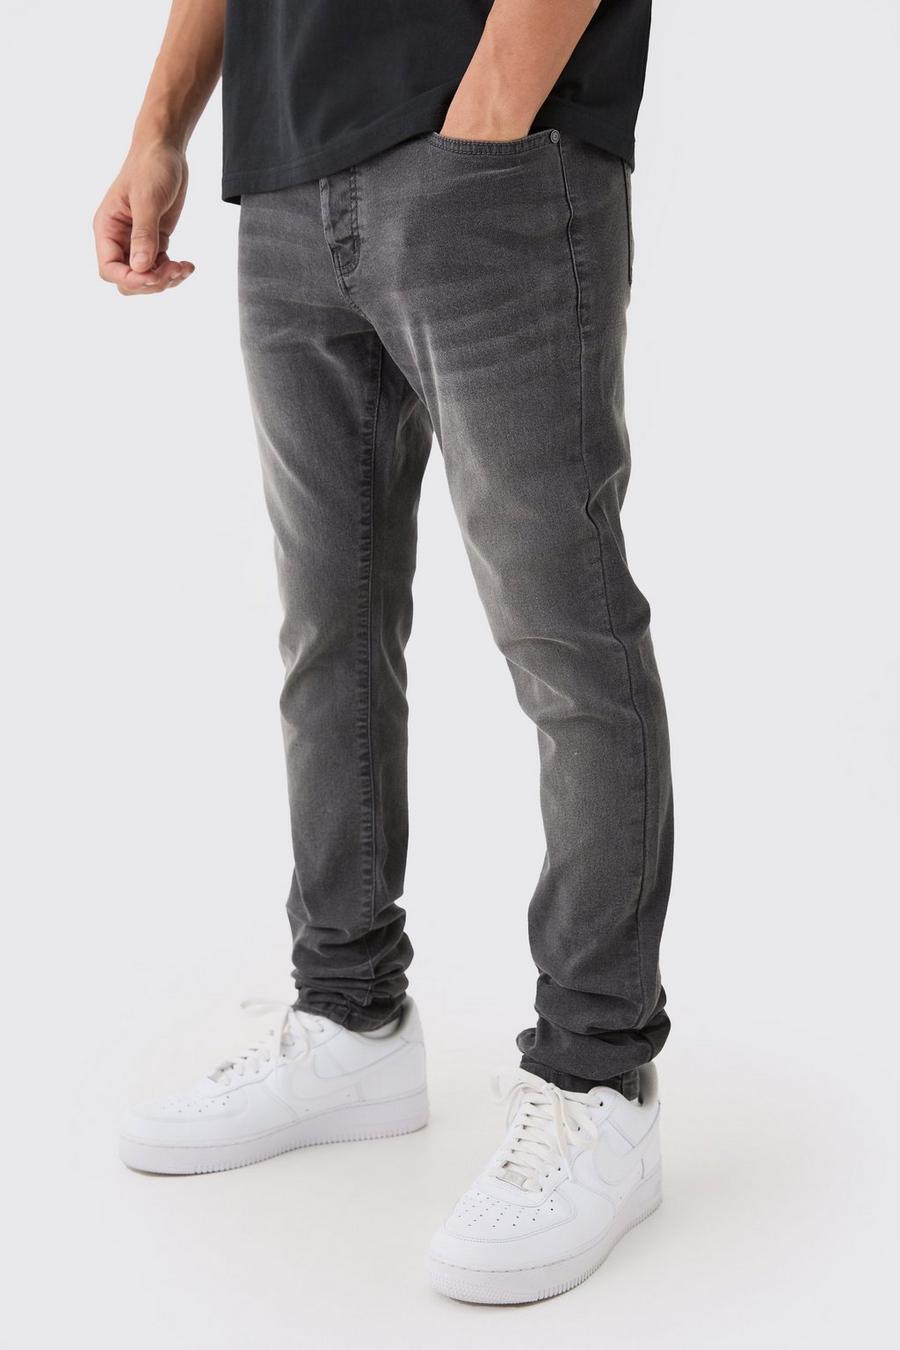 Skinny Stretch Jeans in Grau, Charcoal